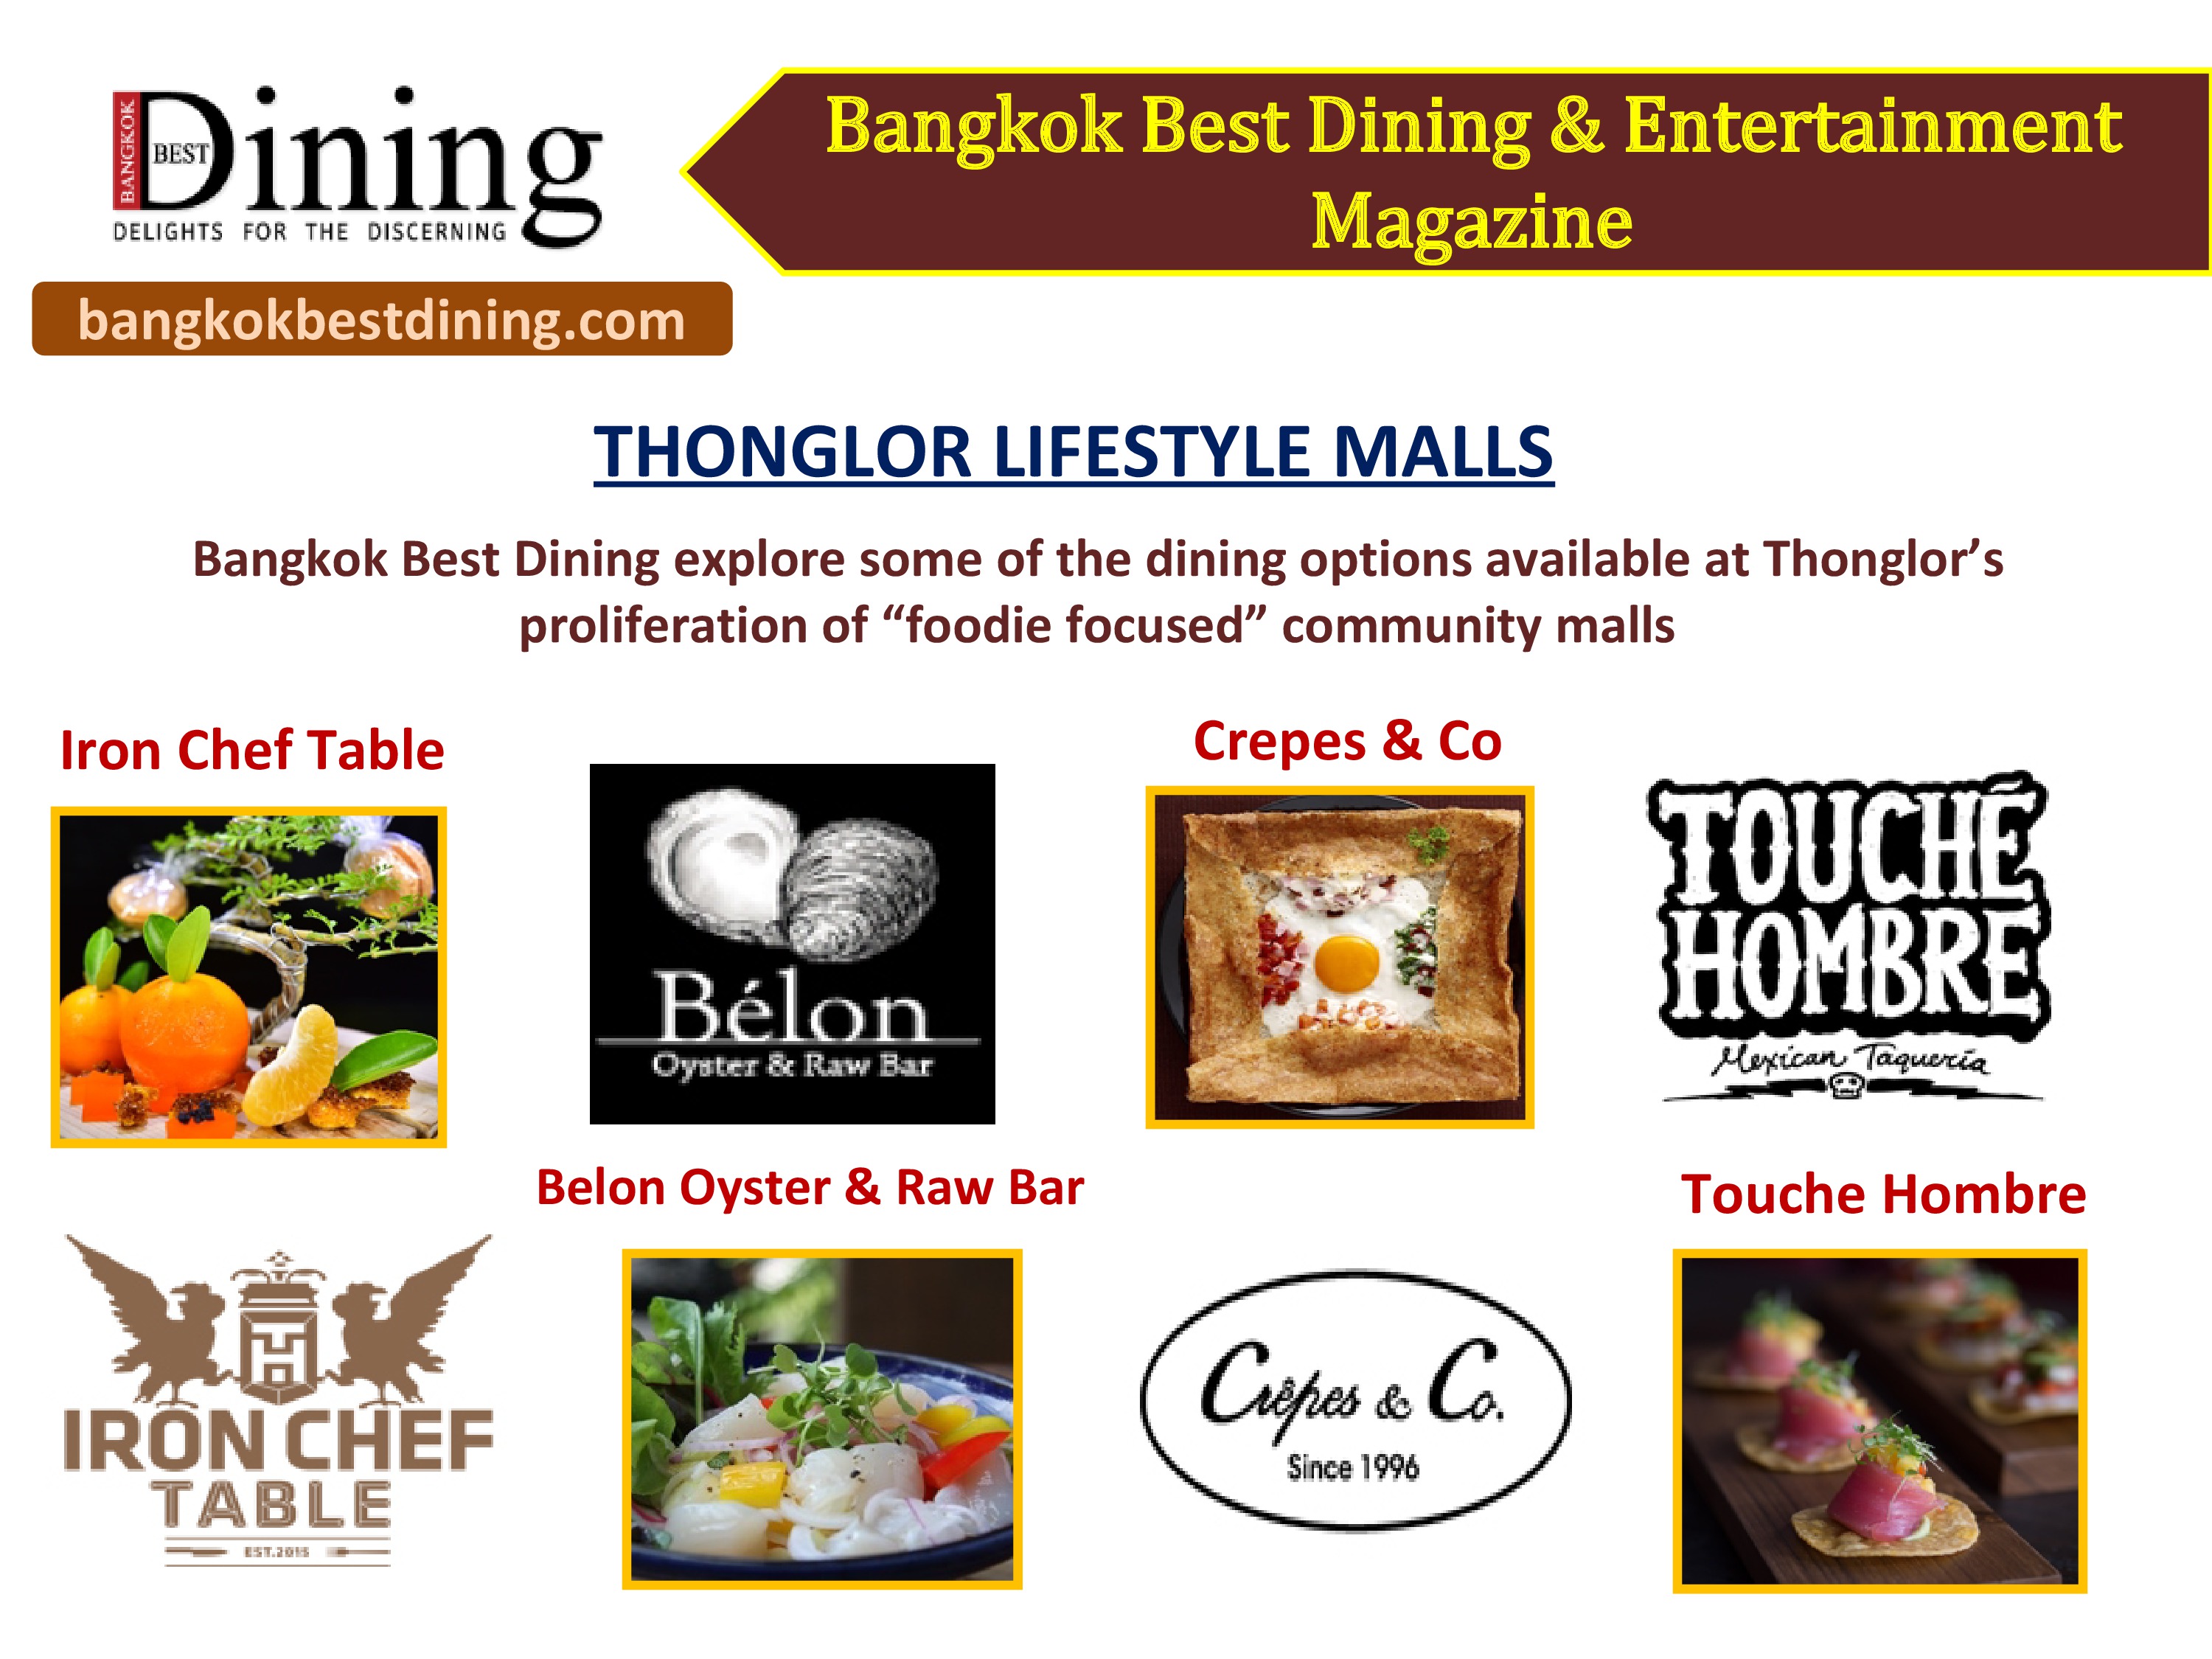 Bangkok Restaurant Reviews1.jpg  by bangkokbestdining